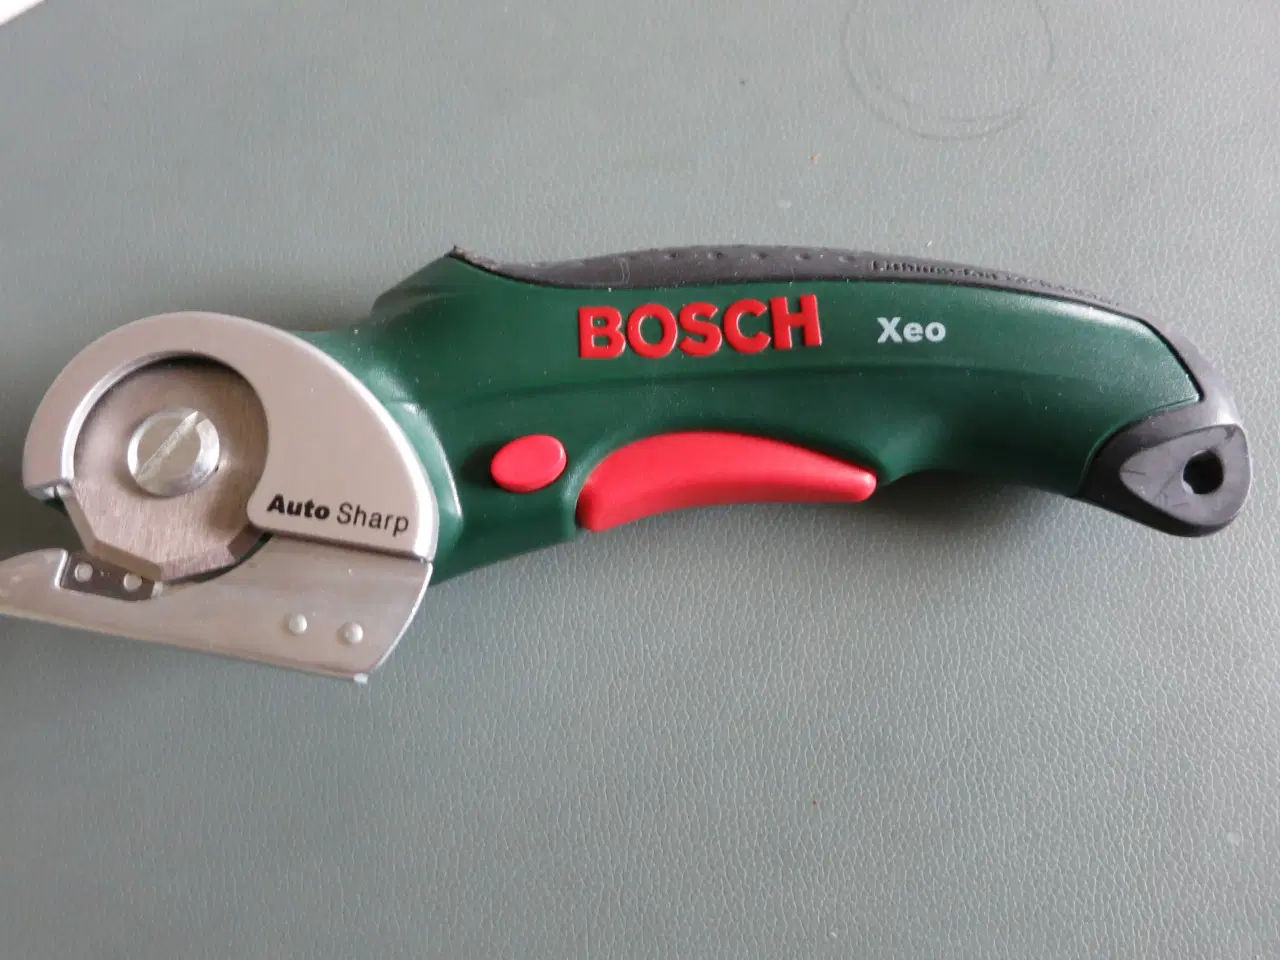 Billede 1 - Bosch Xeo Multikutter - elektrisk hobbykniv